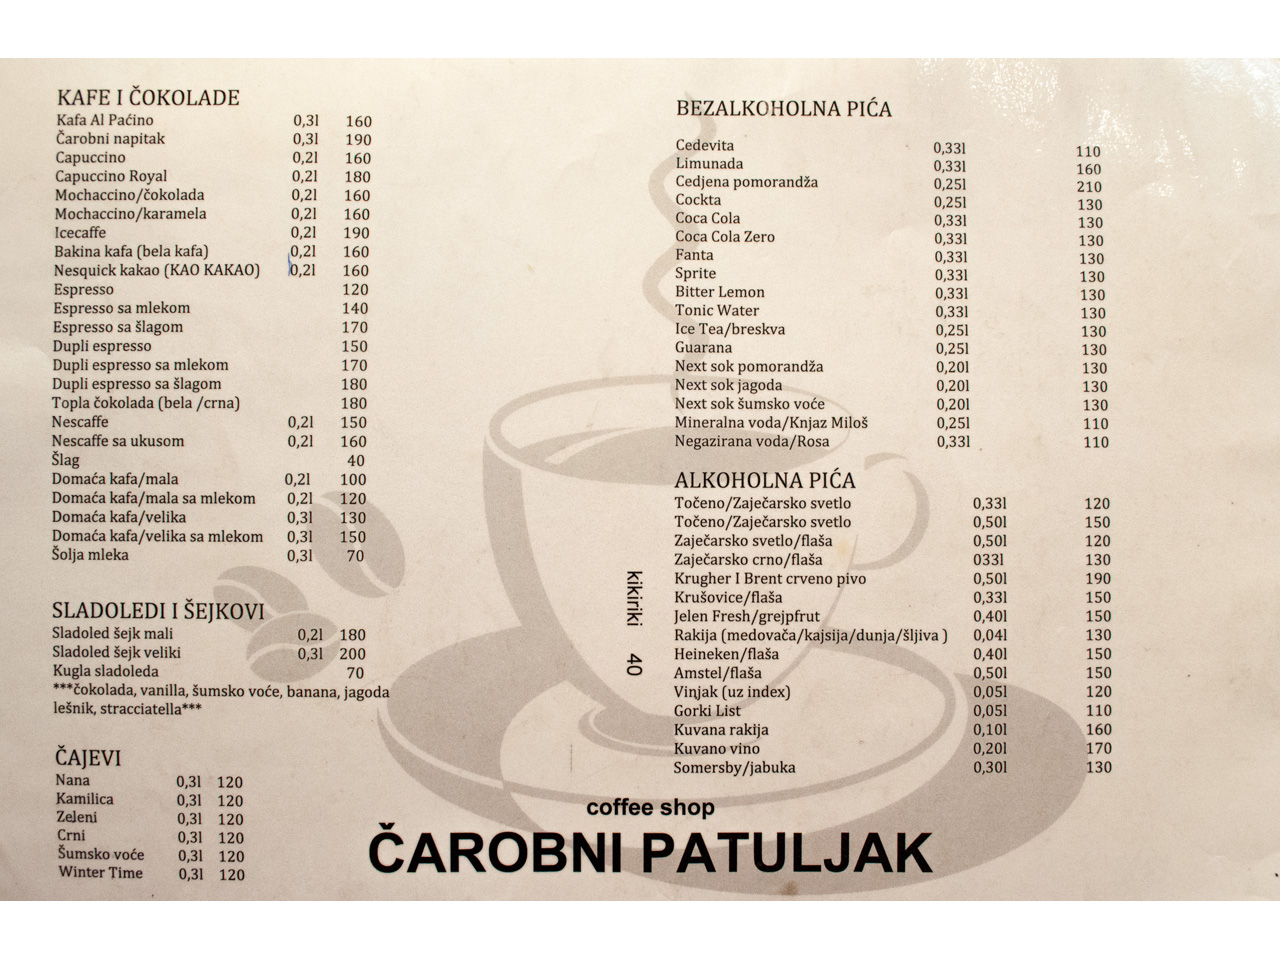 COFFE SHOP CAROBNI PATULJAK Bars and night-clubs Belgrade - Photo 9